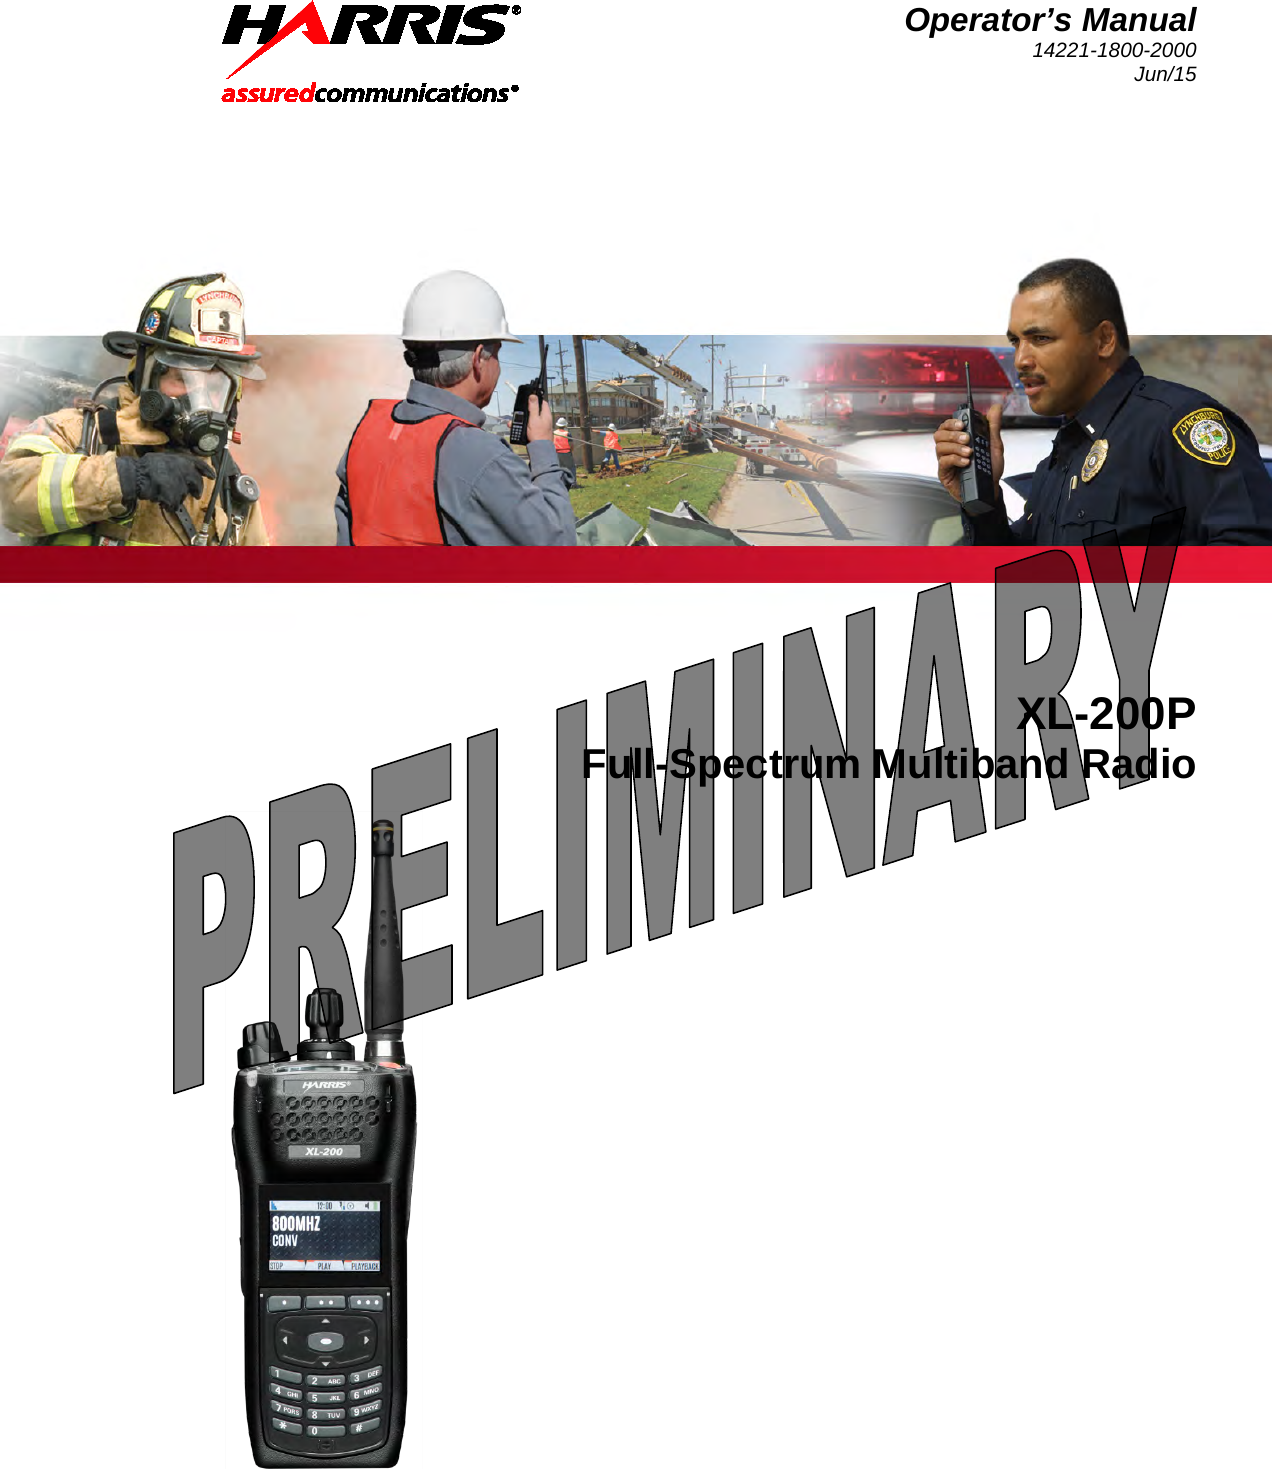 Operator’s Manual 14221-1800-2000 Jun/15   XL-200P Full-Spectrum Multiband Radio      